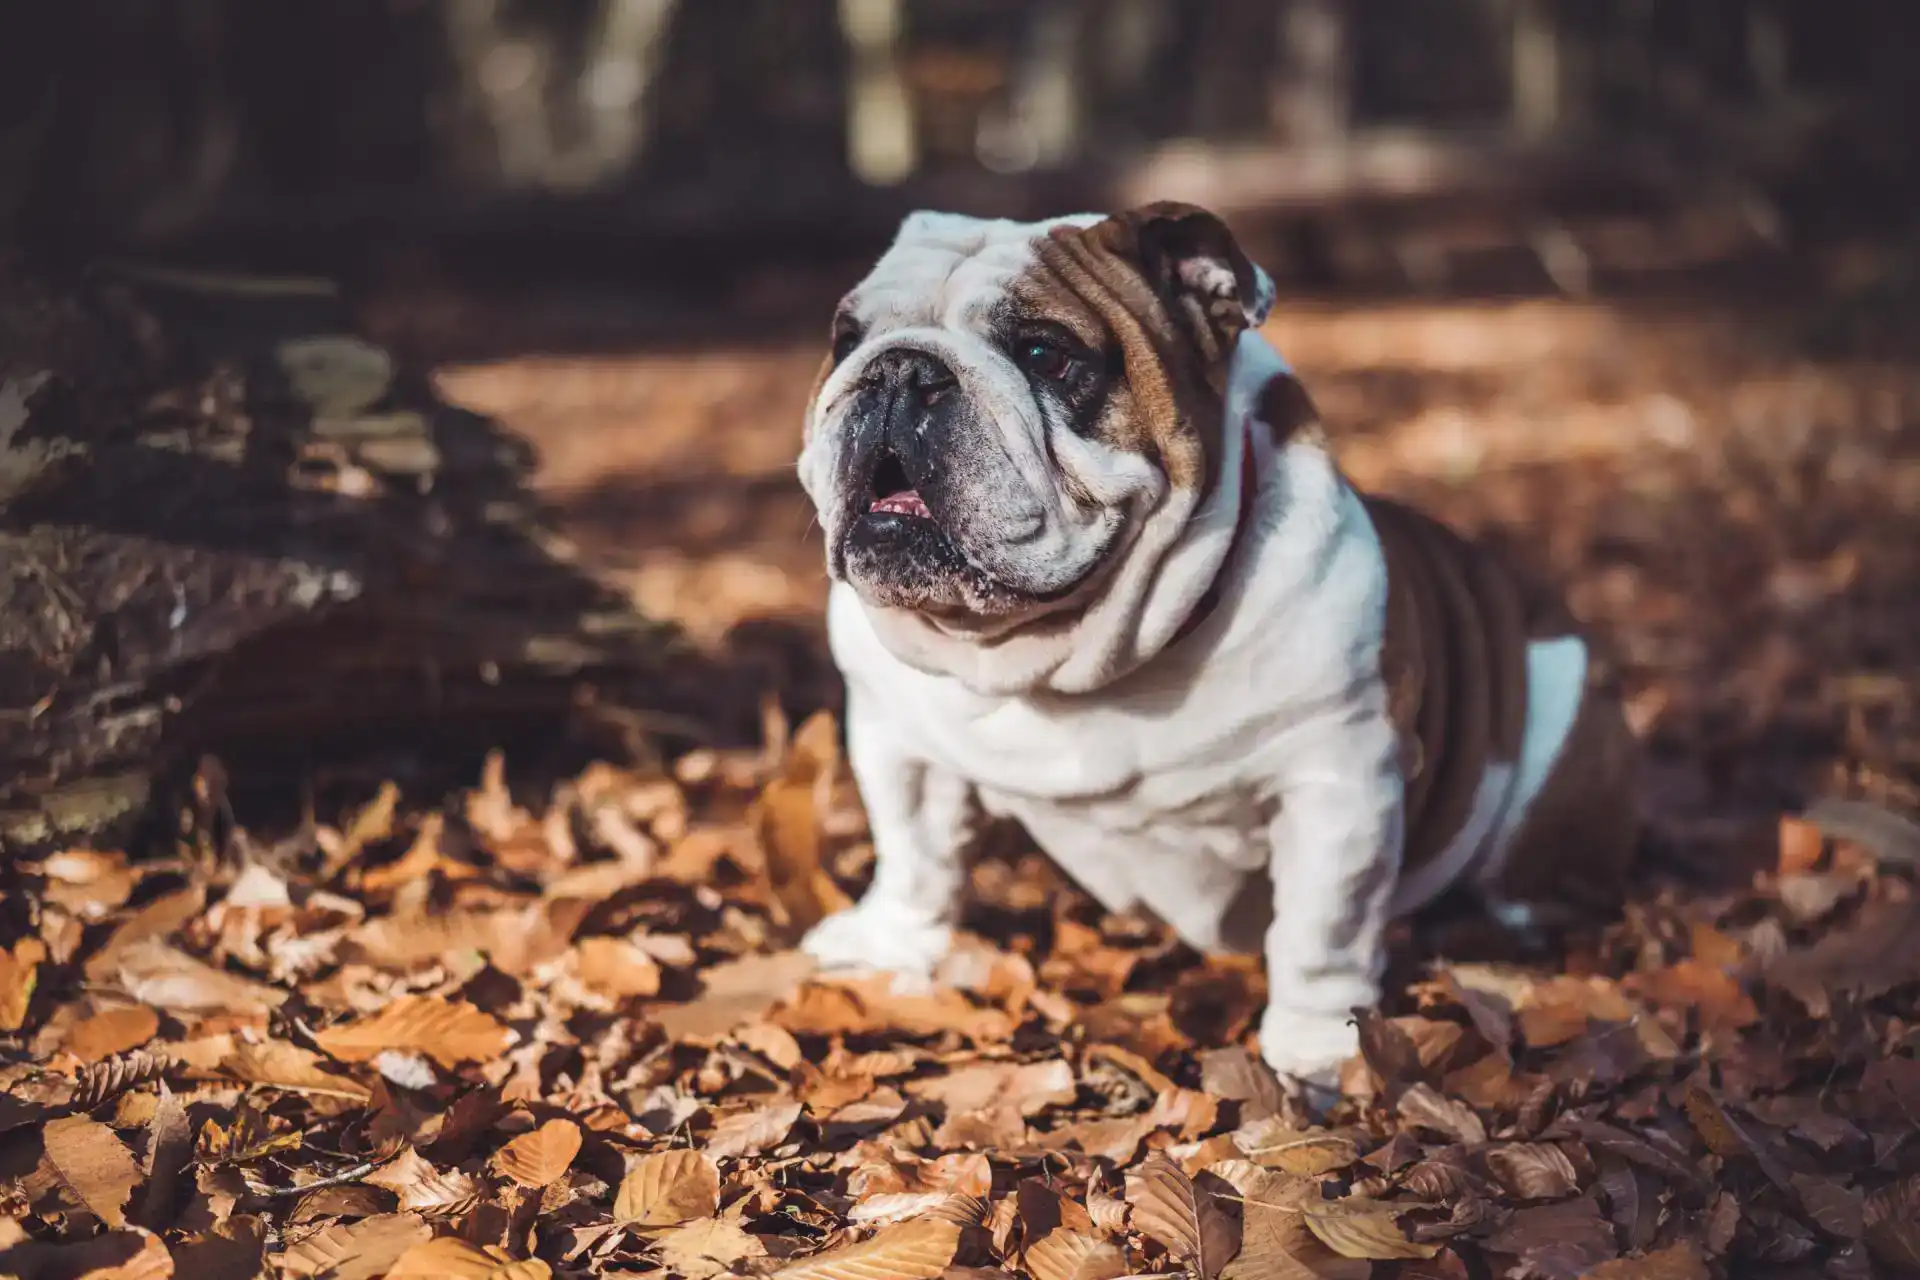 Bulldog sitting and enjoying the autumn day